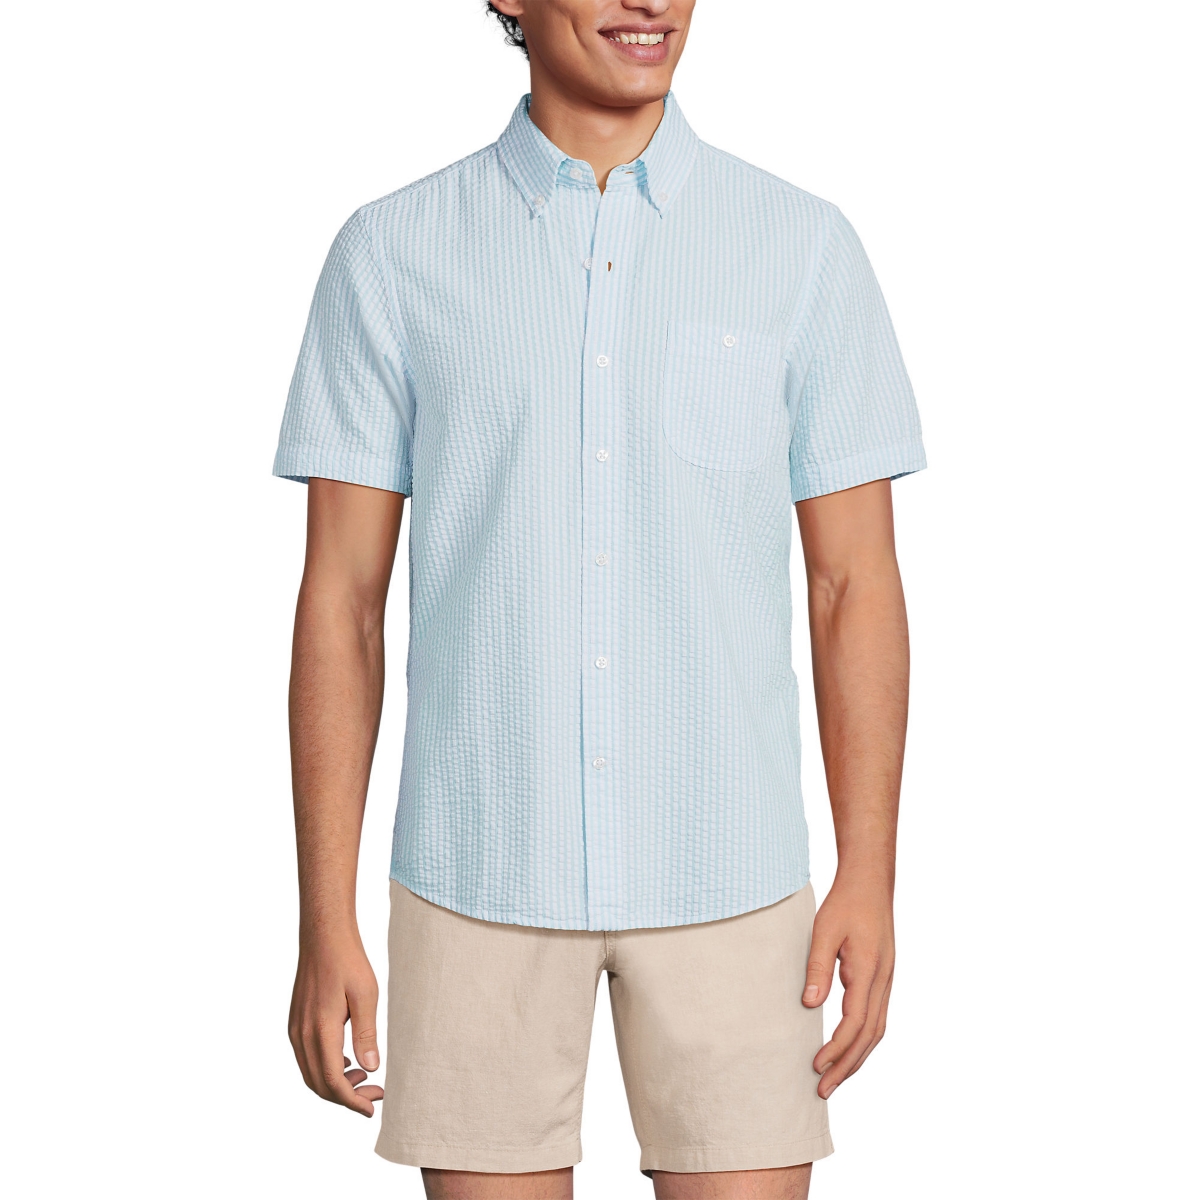 Men's Traditional Fit Short Sleeve Seersucker Shirt - Chicory blue anchor geo